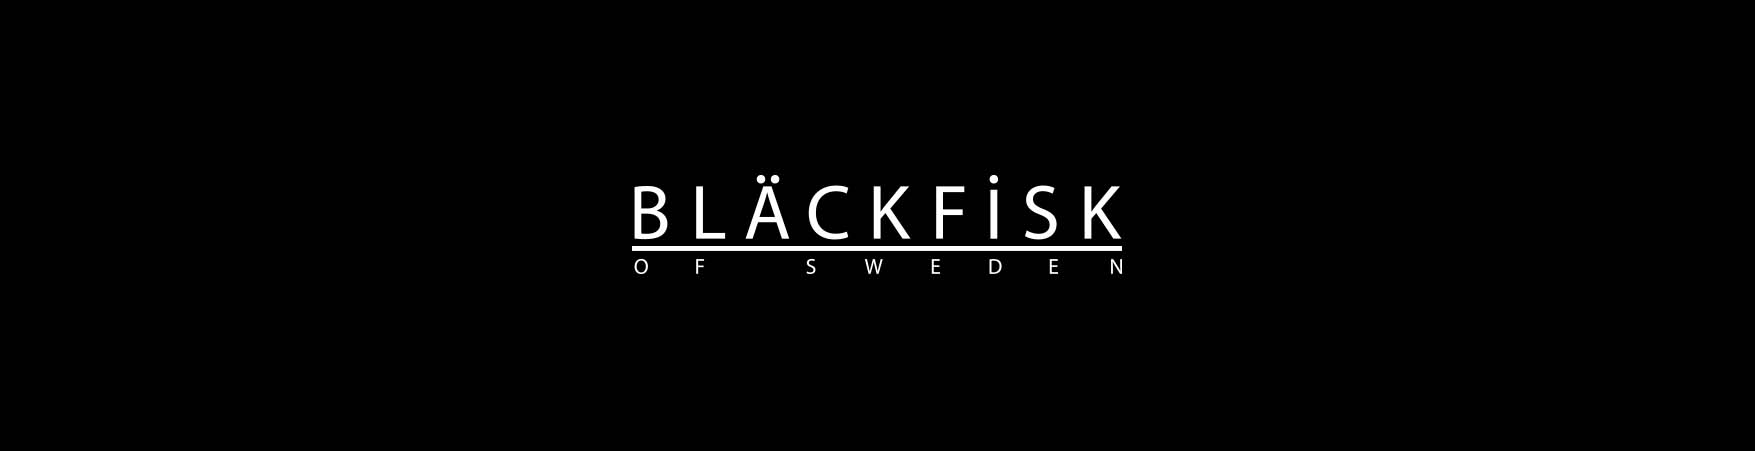 Blackfisk